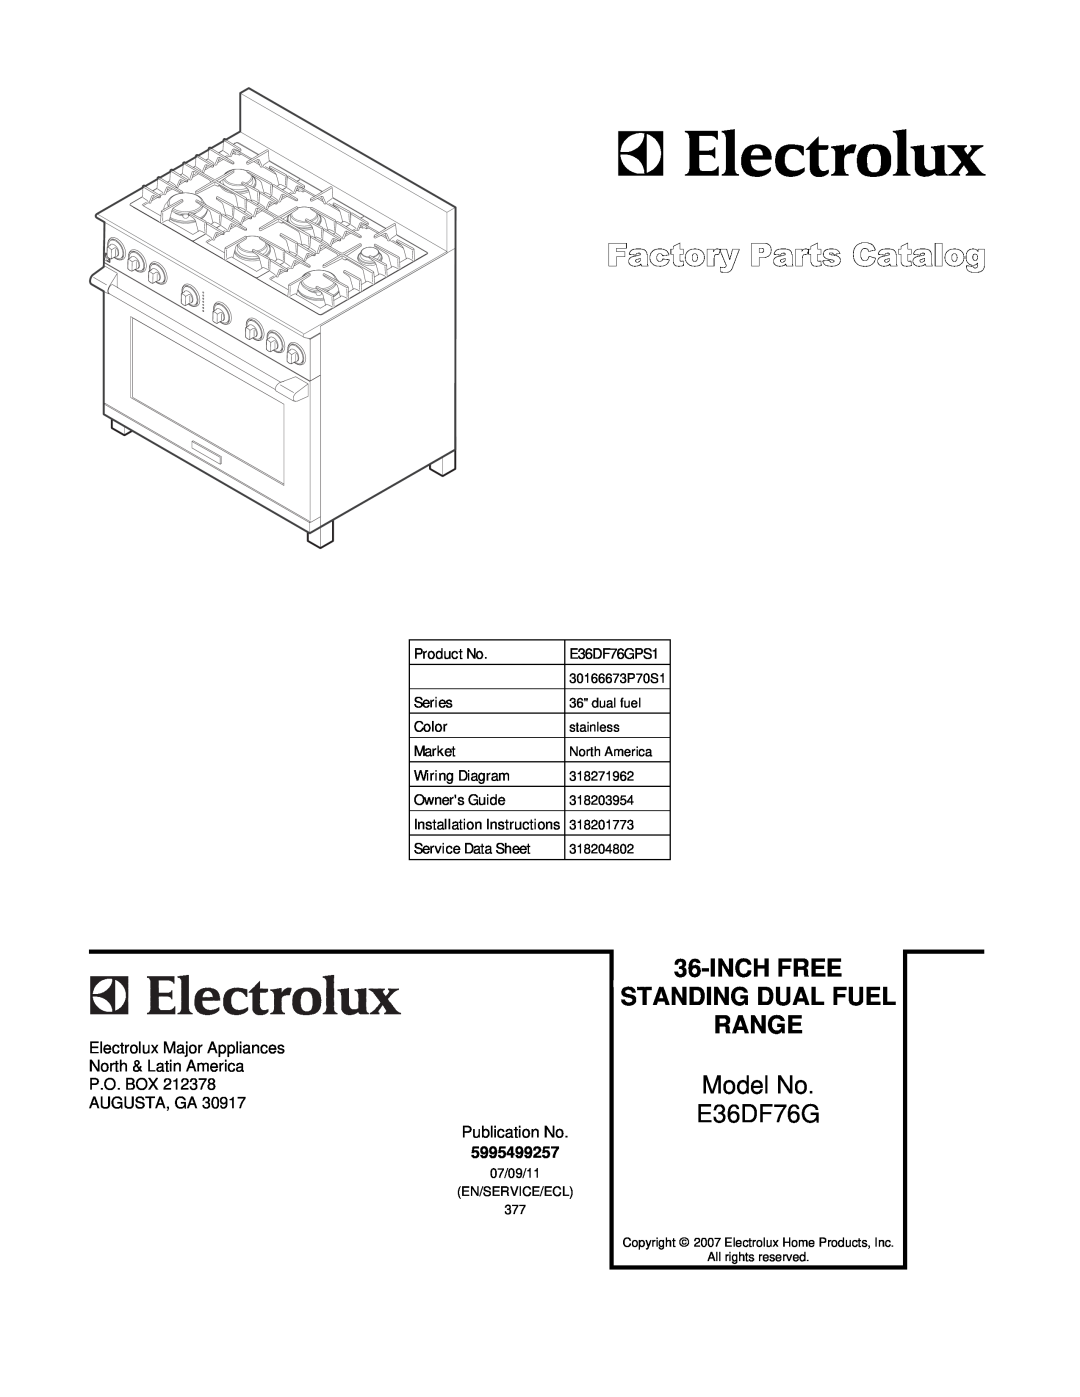 Electrolux E36DF76GPS1, 30166673P70S1 installation instructions Inchfree Standing Dual Fuel Range, Model No E36DF76G 